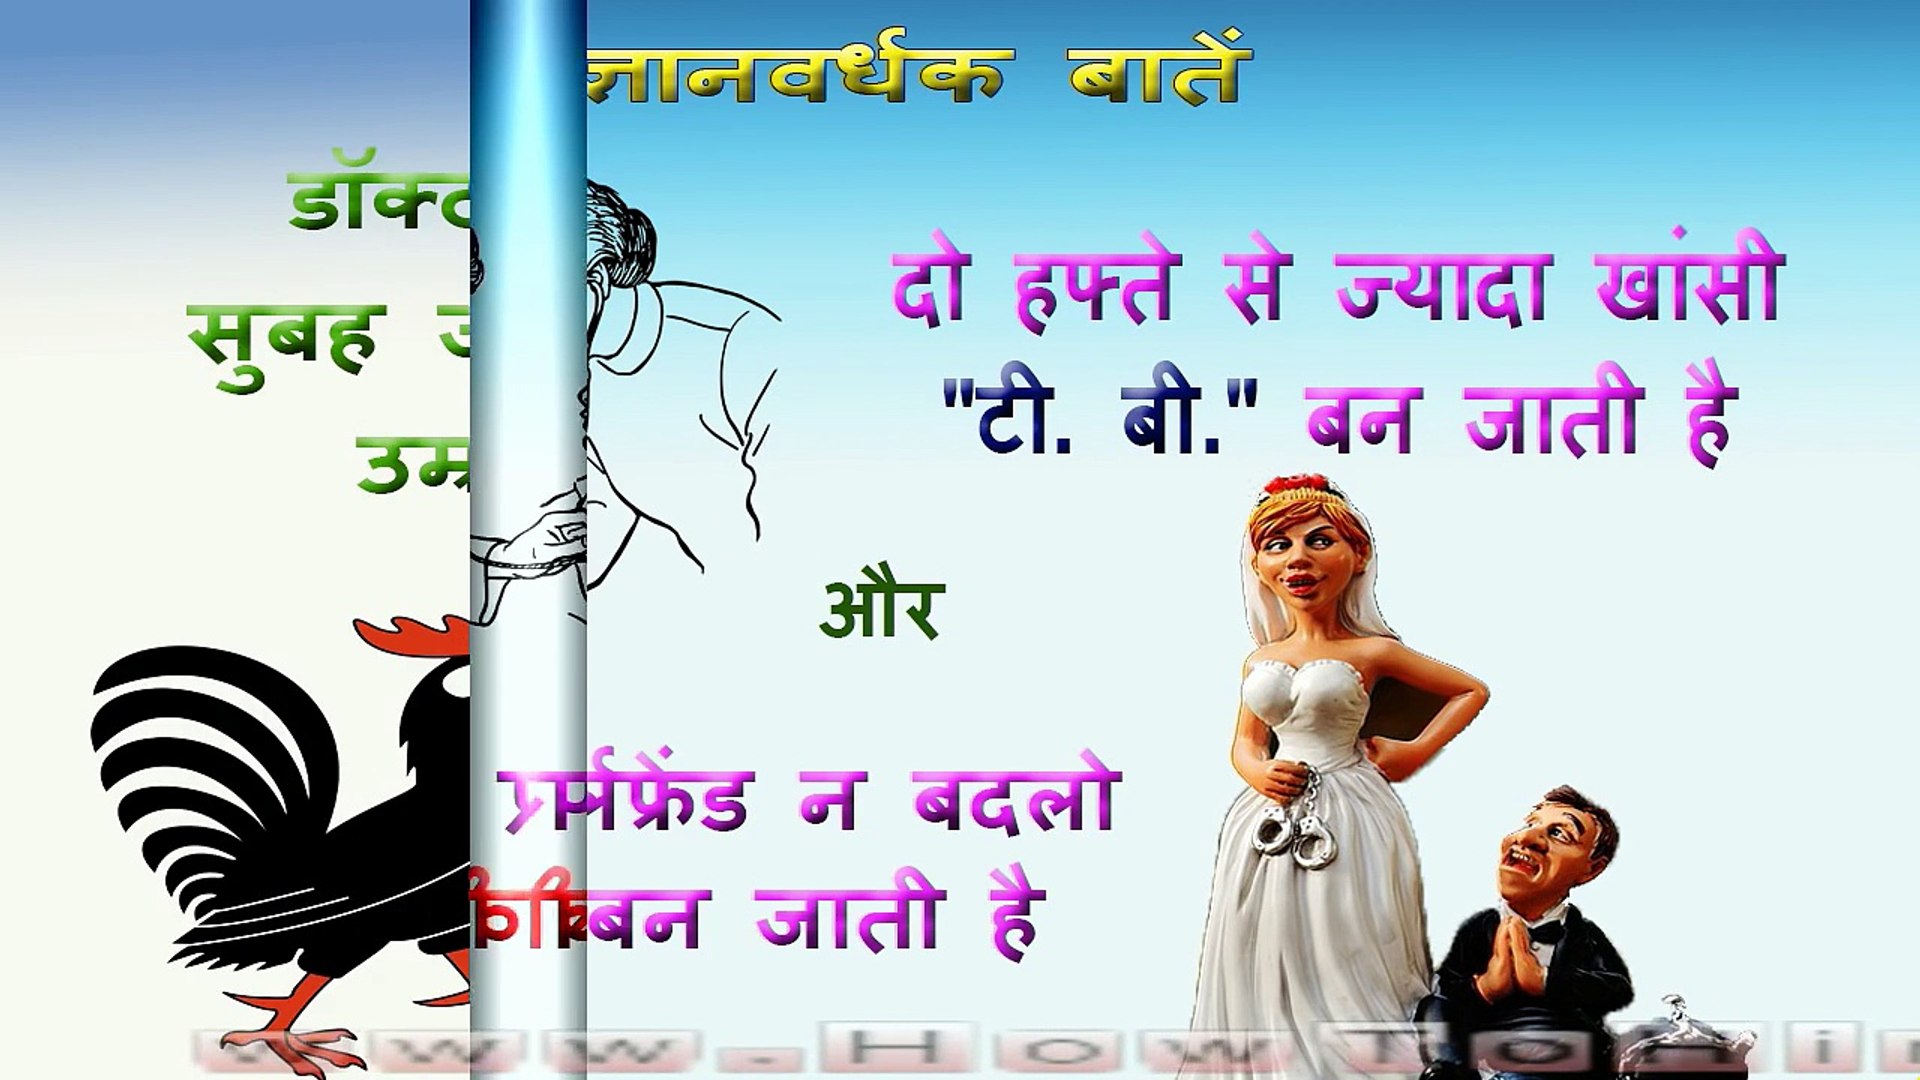 Funny Videos In Hindi Language Indian Very Comedy Jokes Komedi New